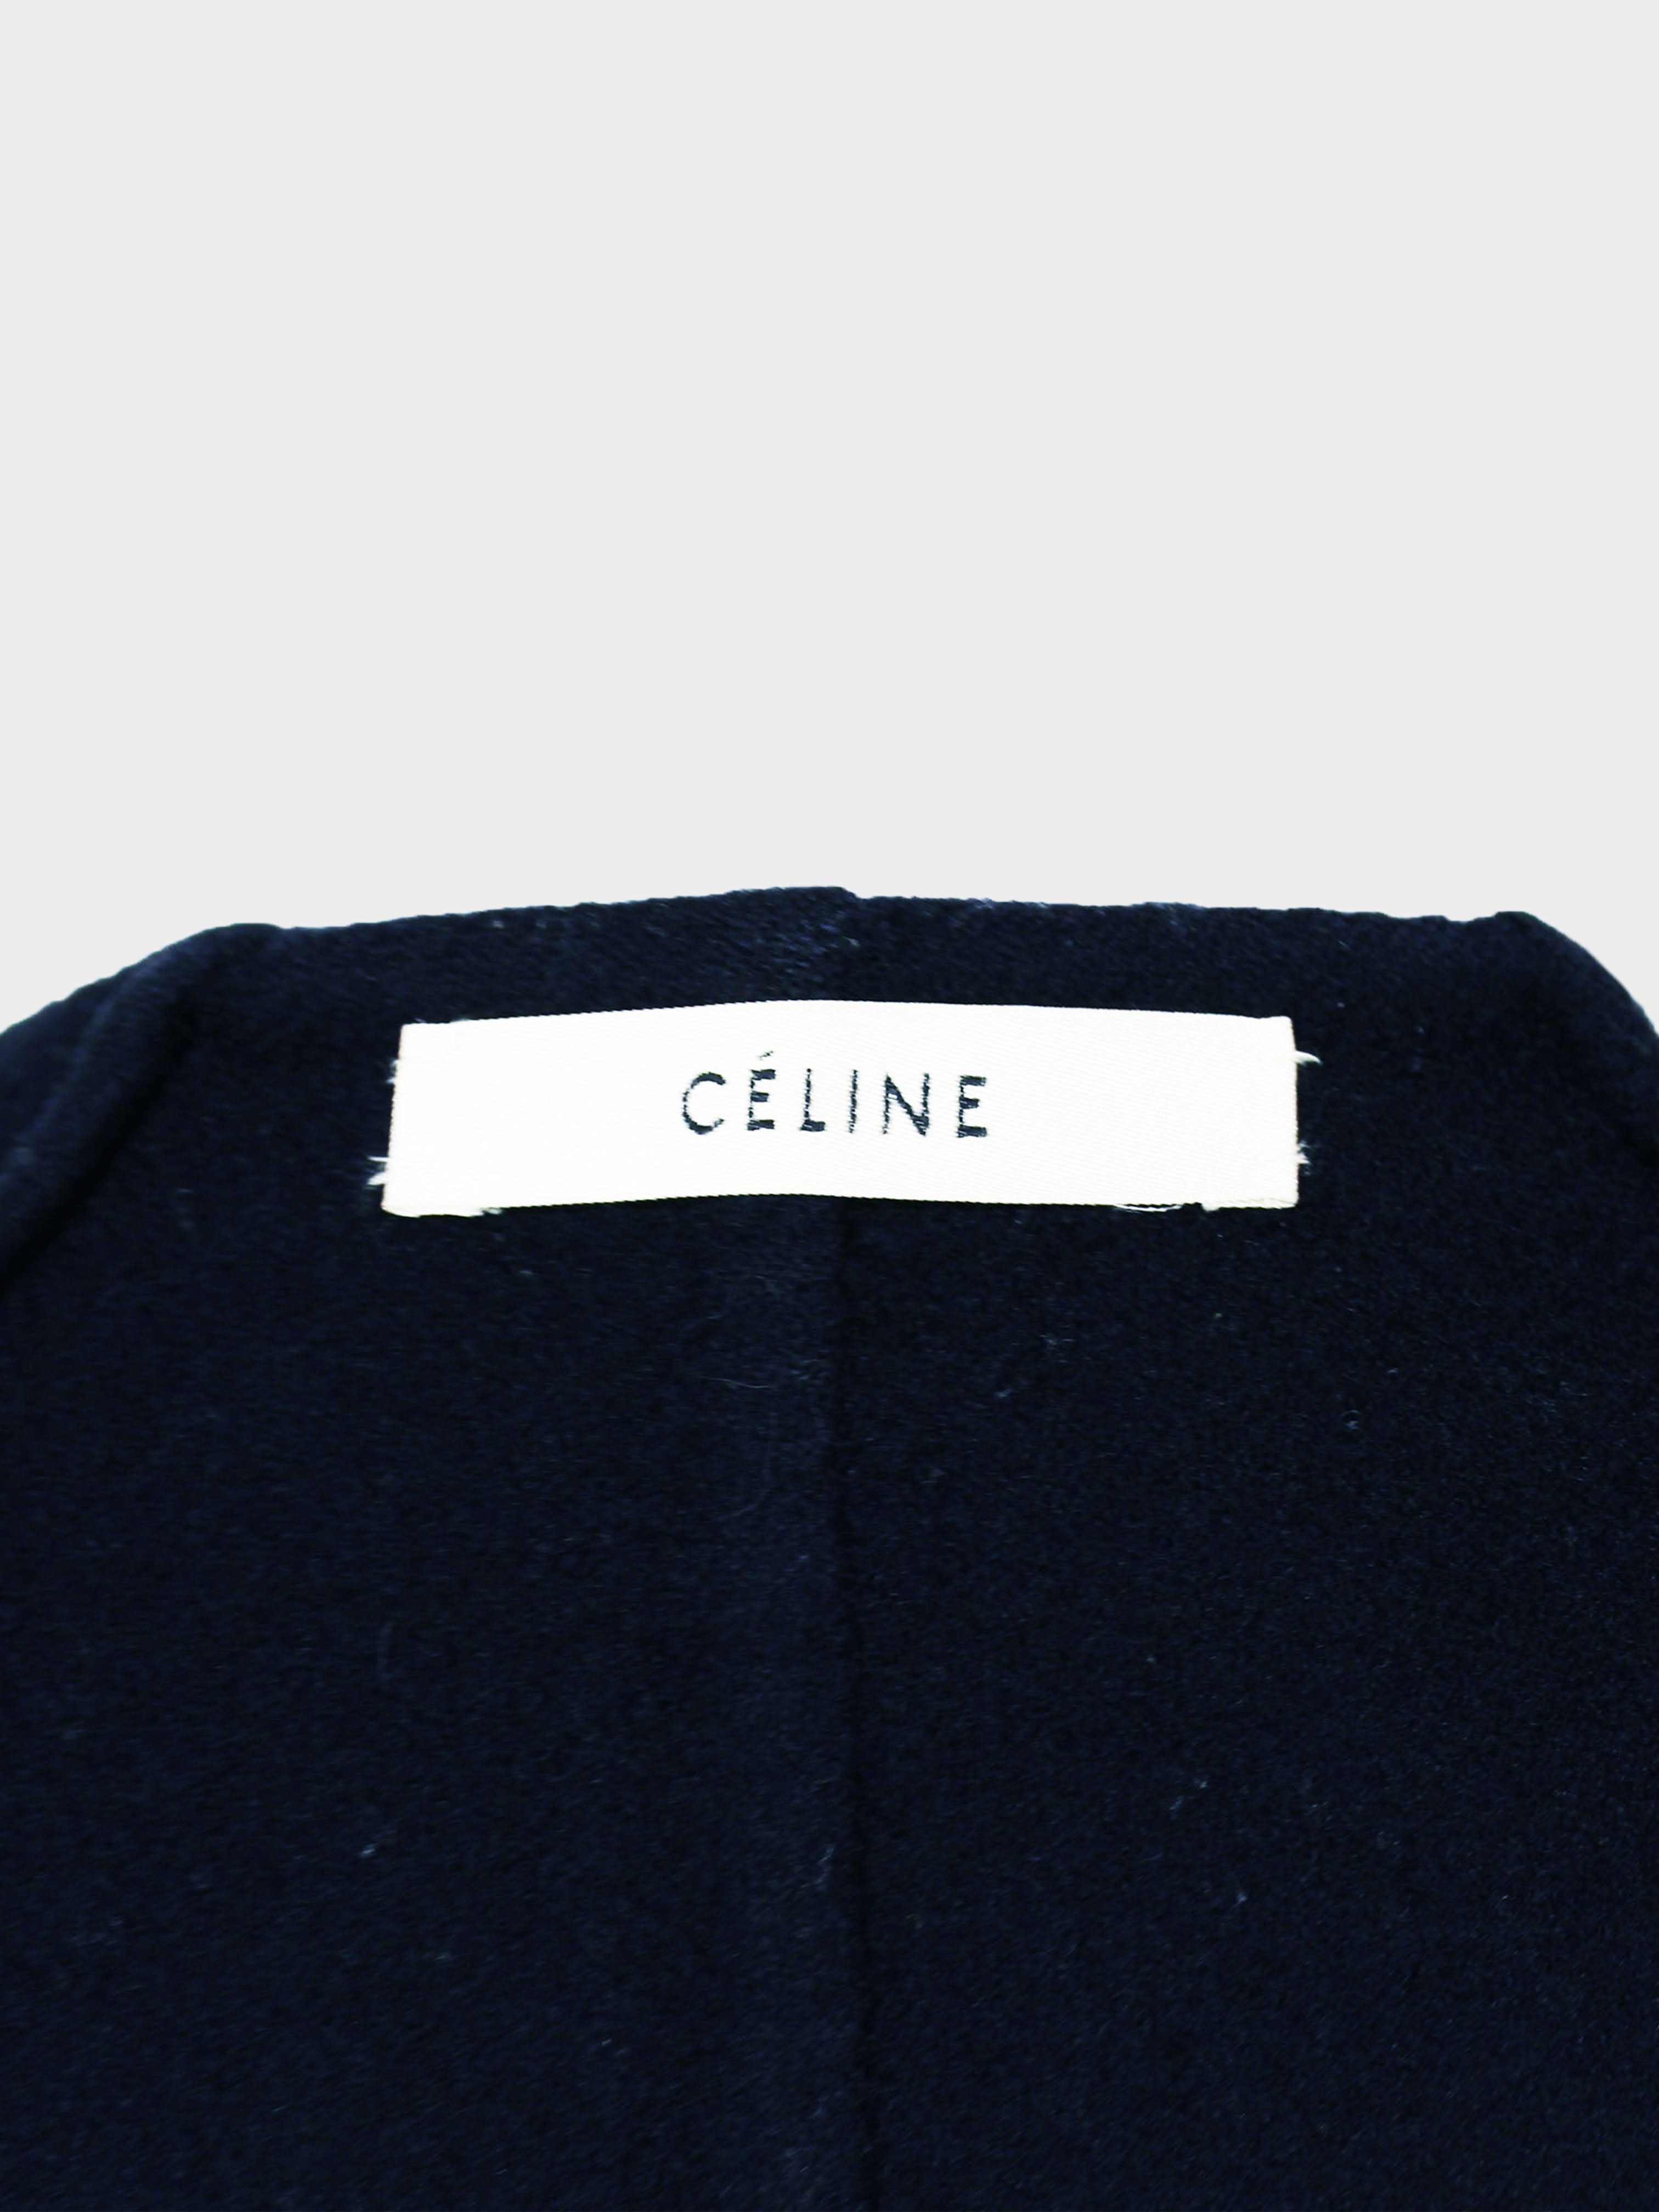 Céline by Phoebe Philo 2010s Navy Wool Coat